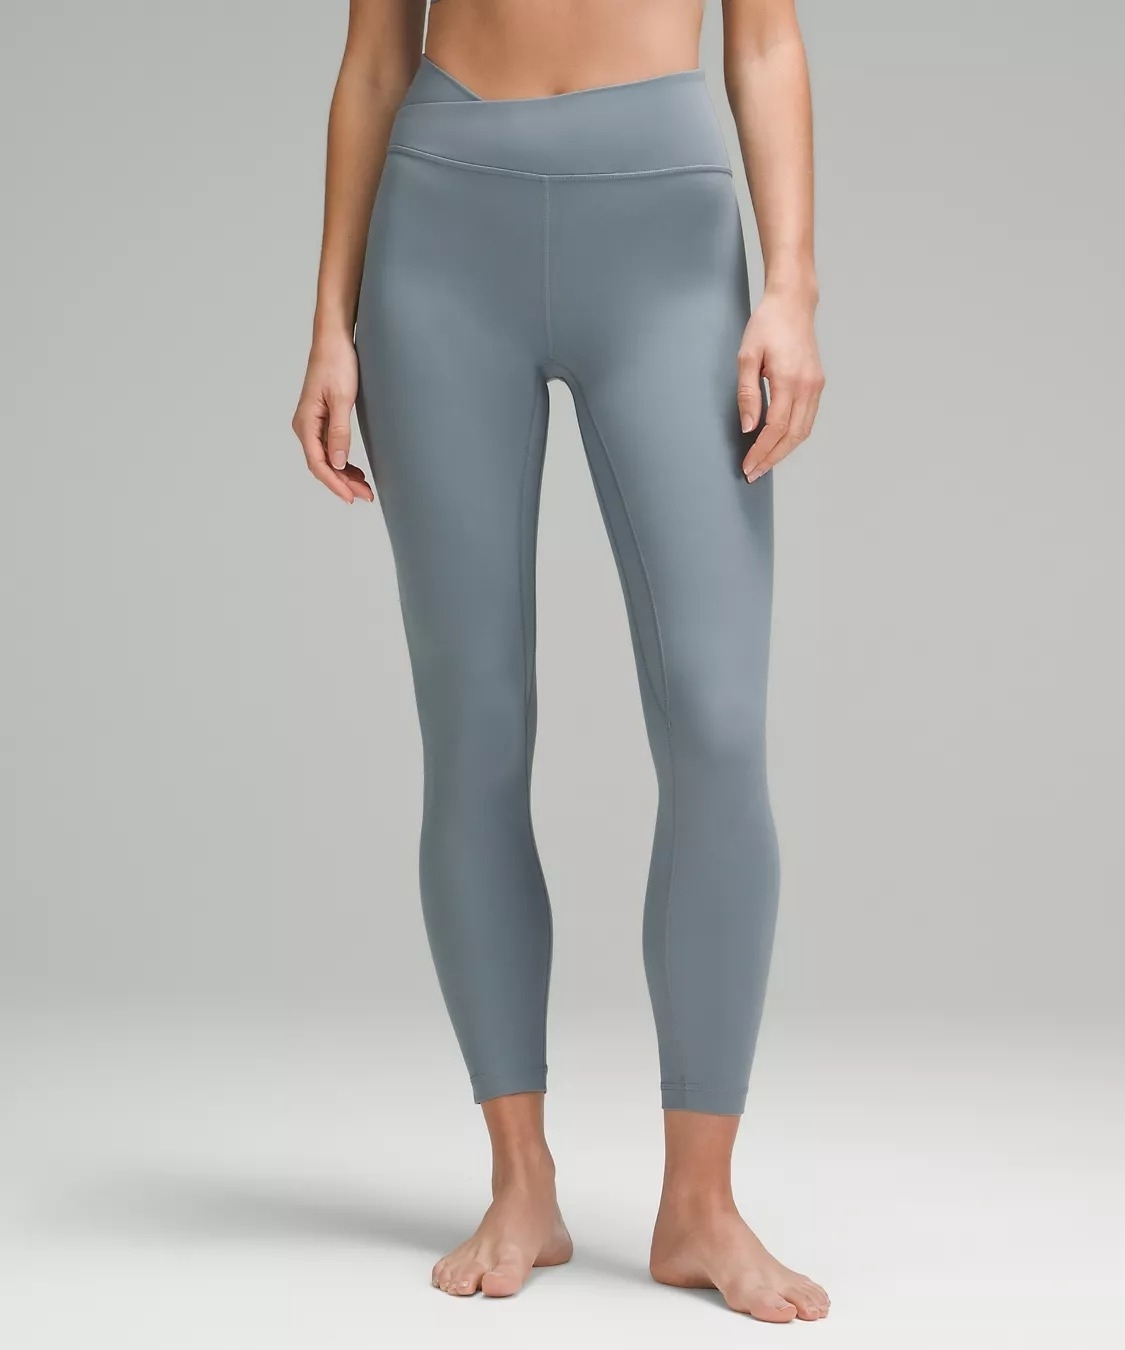 model wearing gray ankle-length leggings with asymmetrical waist band design